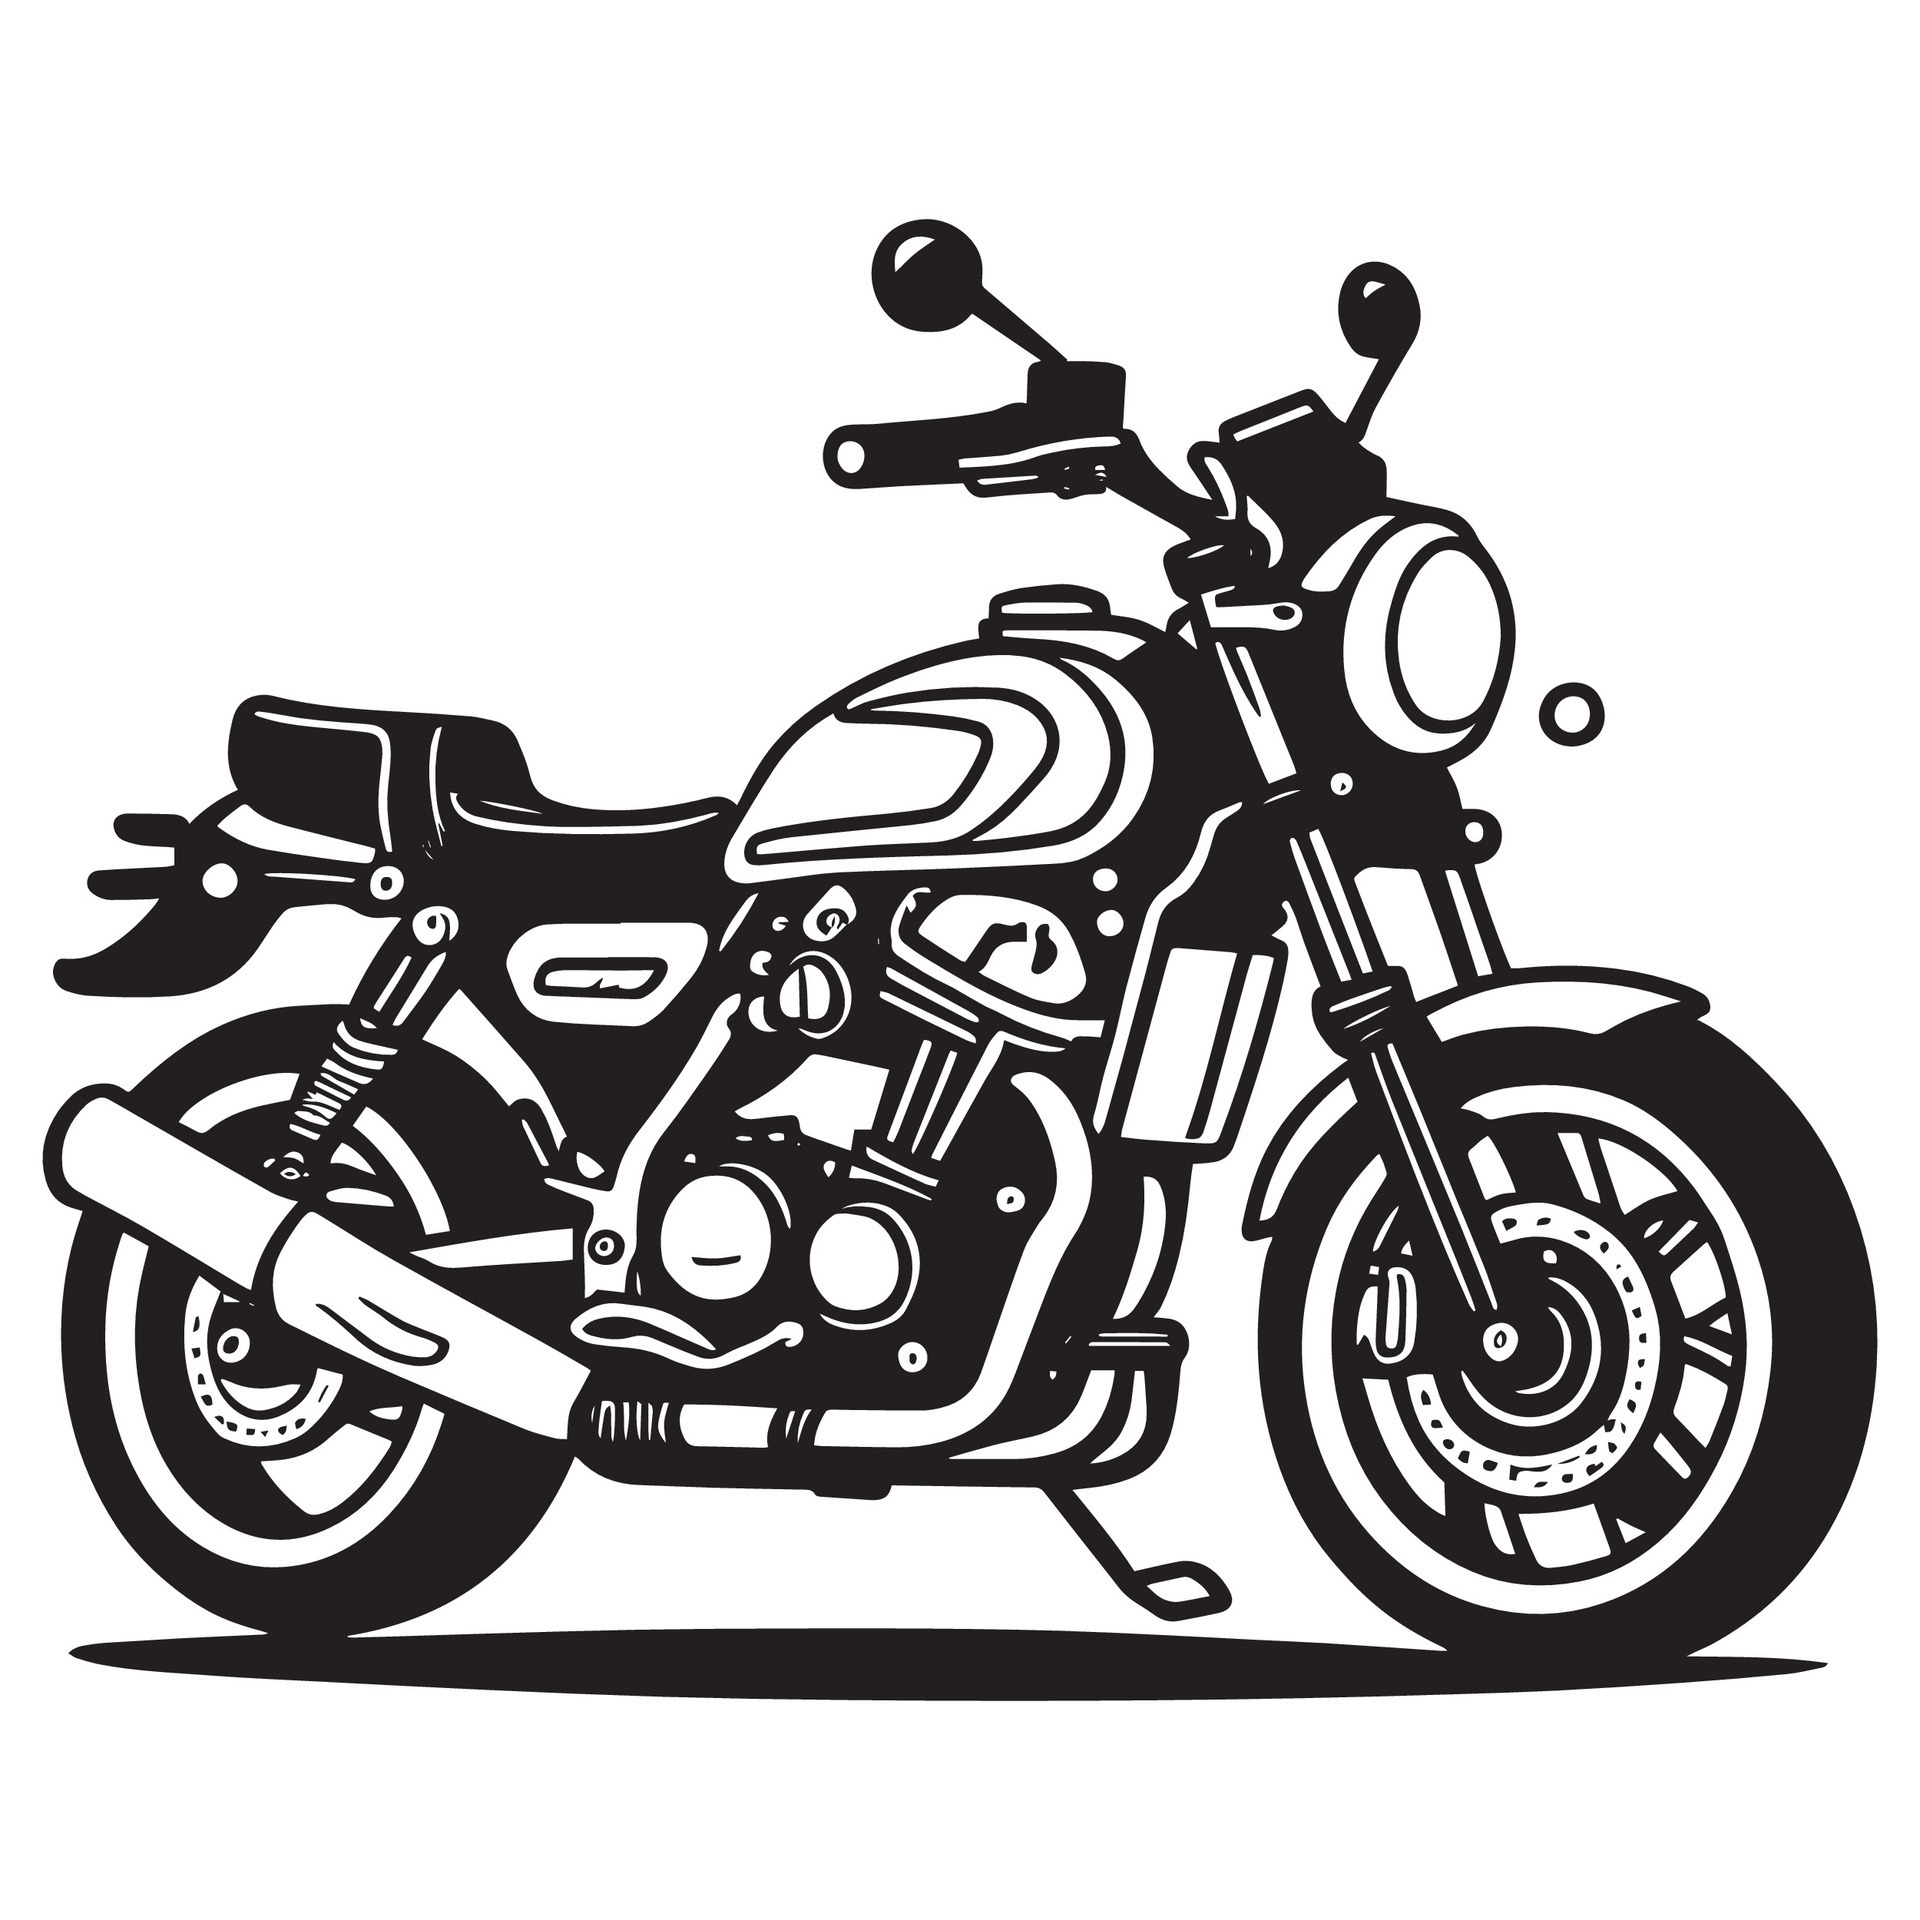 ein Motorrad Vektor Clip Art, Motorrad Linie Kunst Logo, Motorrad Vektor  Silhouette, ein Mann Reiten ein Motorrad Vektor, 24790388 Vektor Kunst bei  Vecteezy